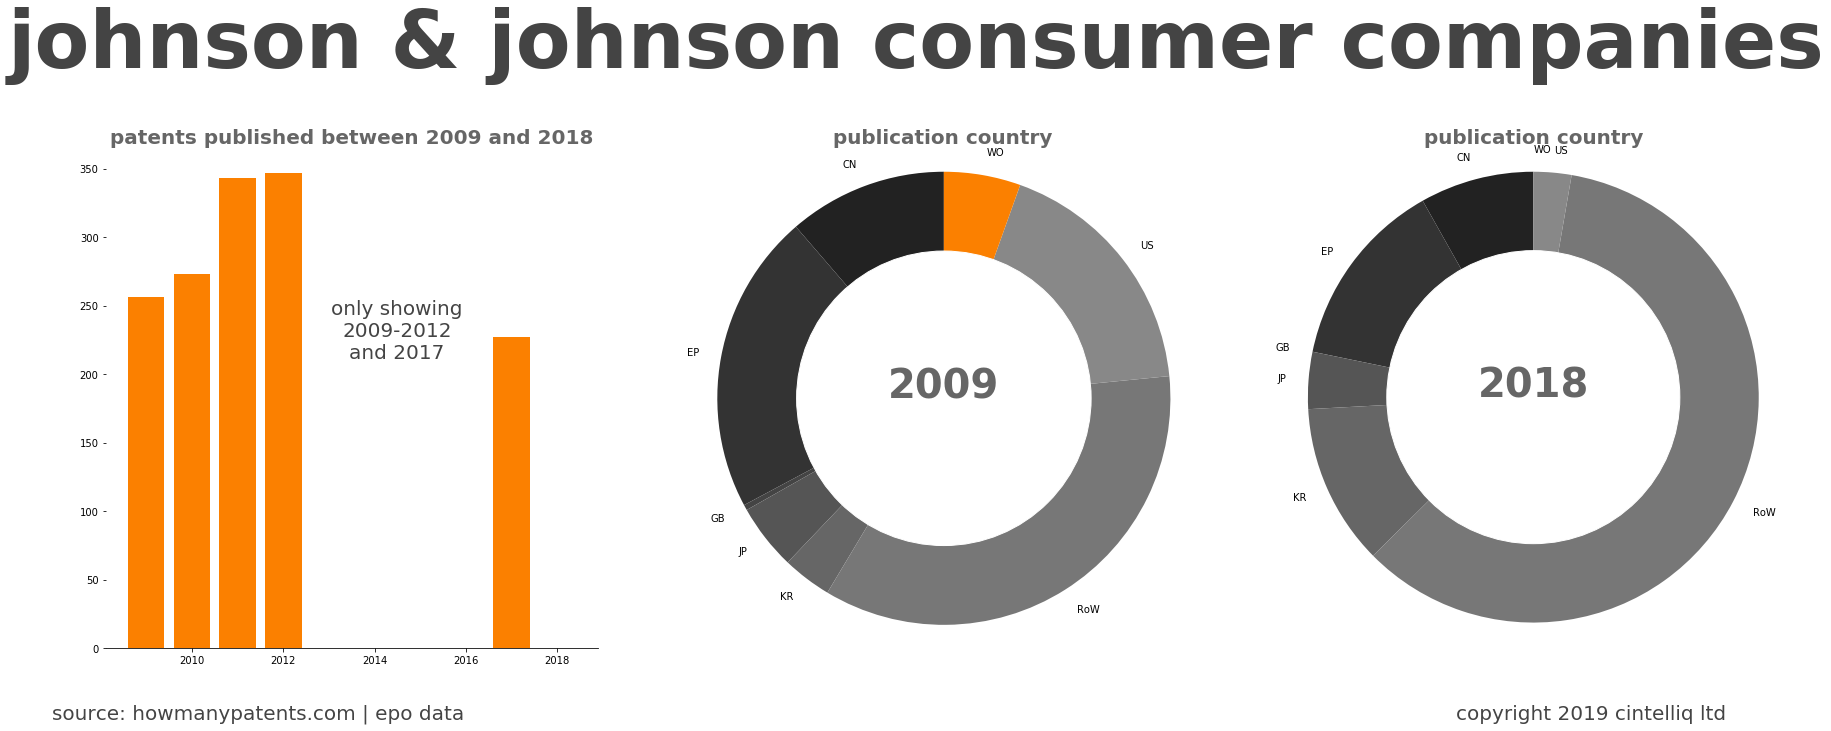 summary of patents for Johnson & Johnson Consumer Companies